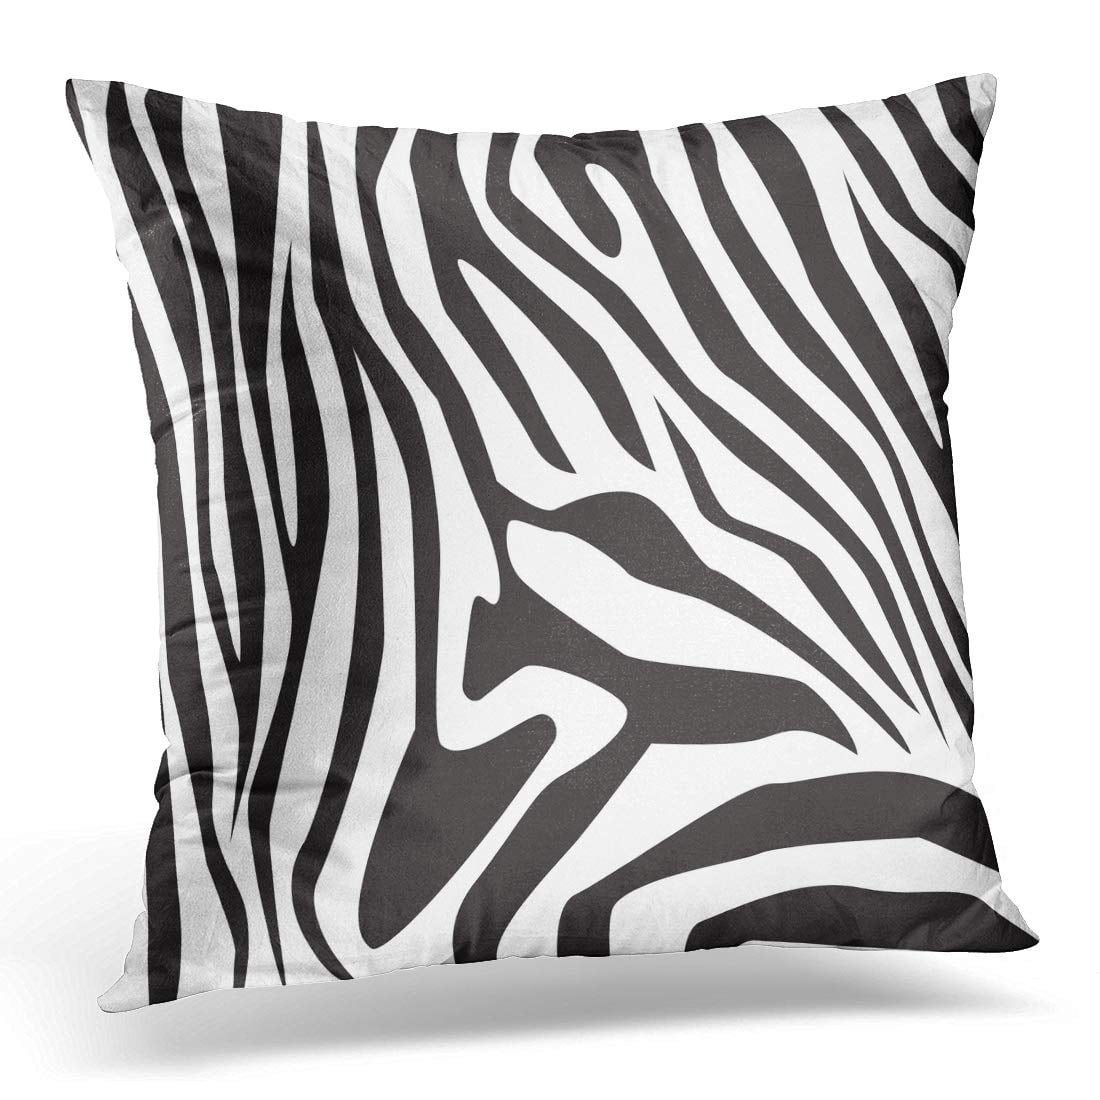 ALAZA Lips Zebra Area Rug Rugs for Living Room Bedroom 5'3x4' 